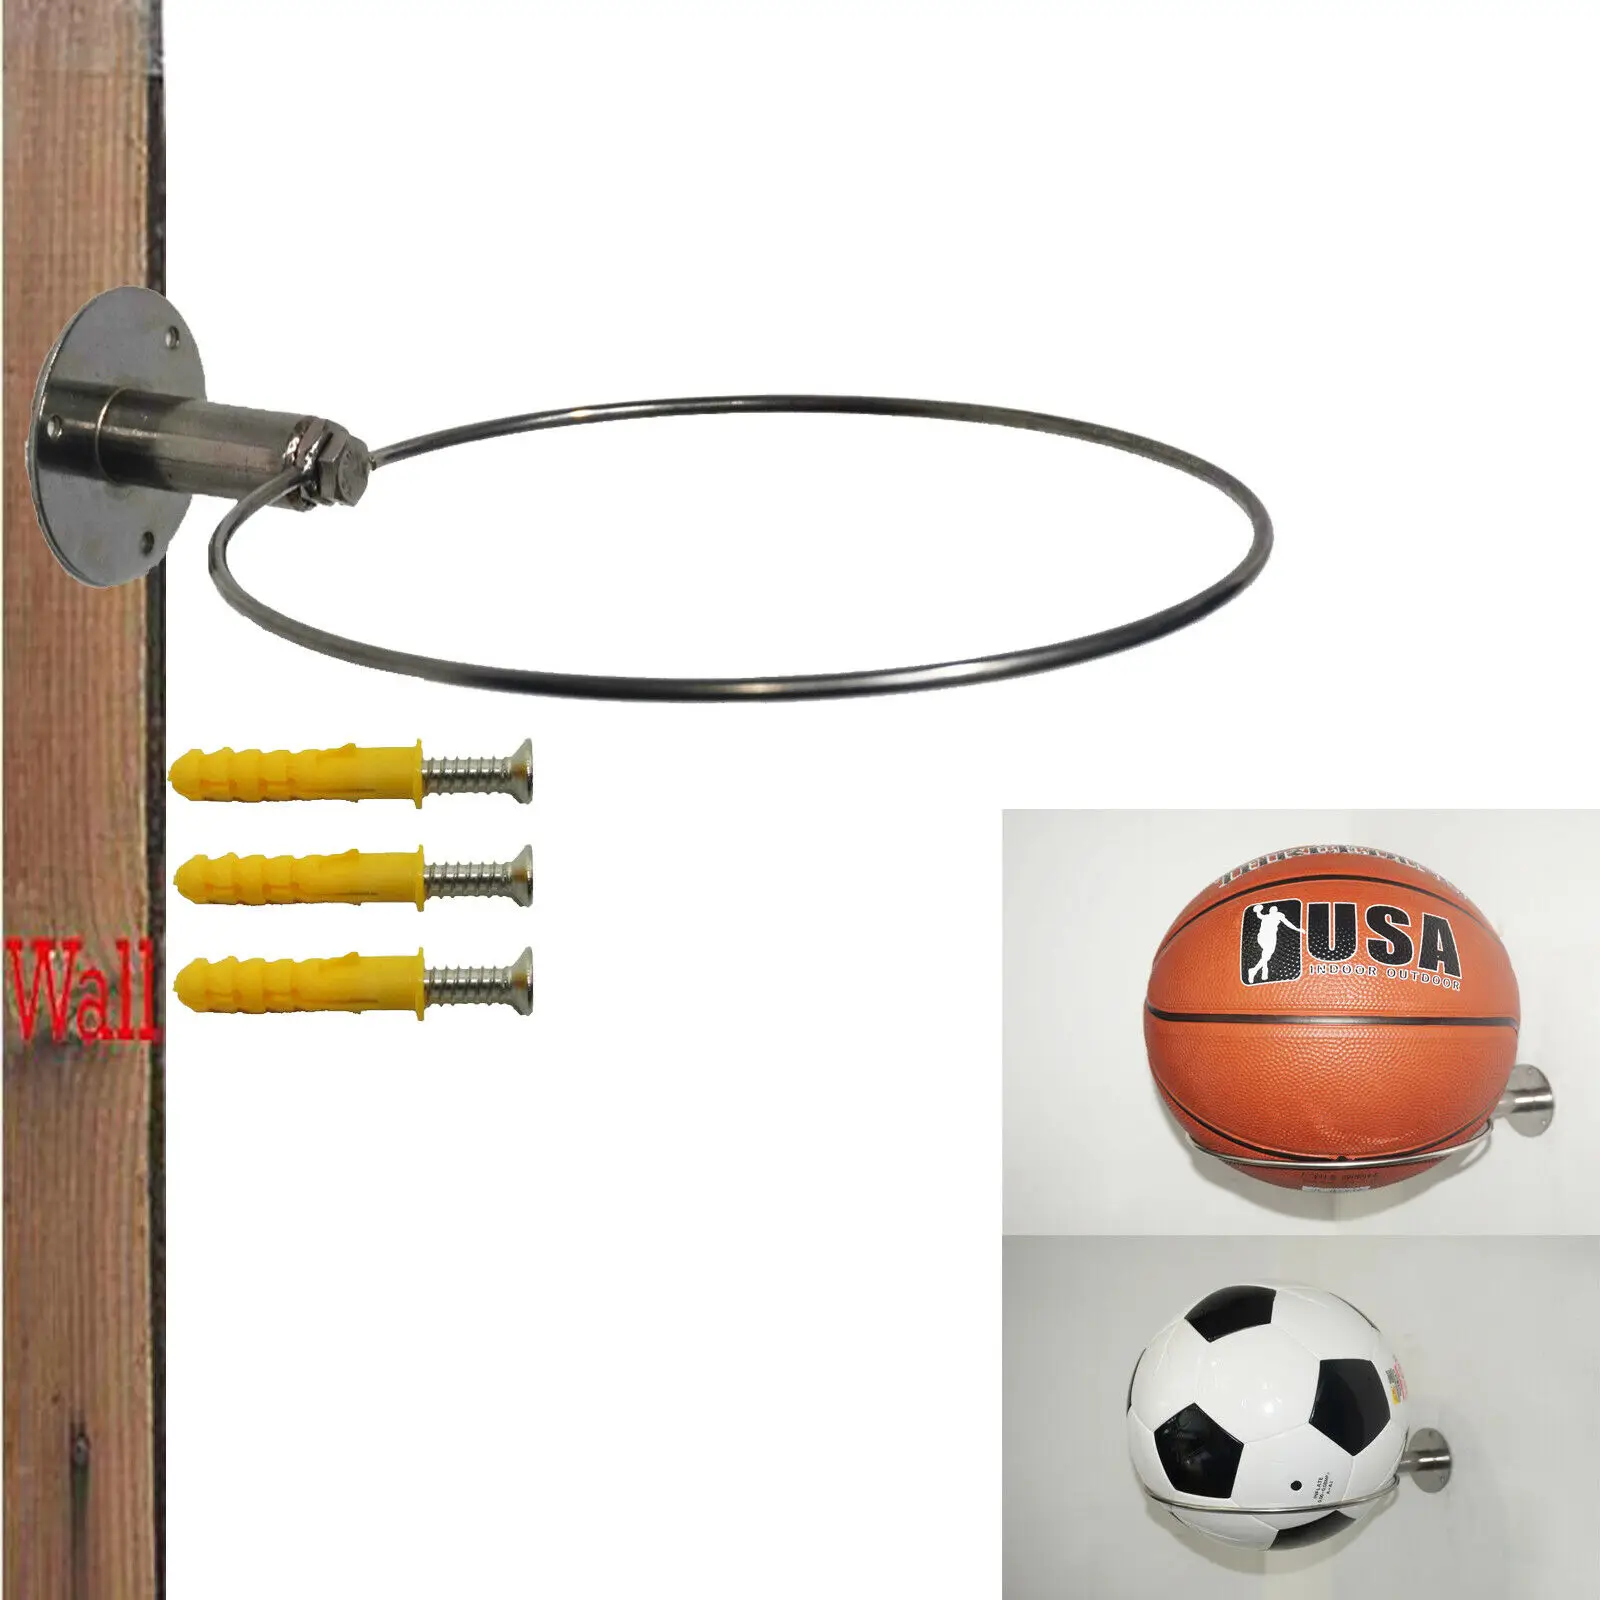 Soccers Holder Wall Mount Basketball Storage Rack Display Holder For Ball L6C0 